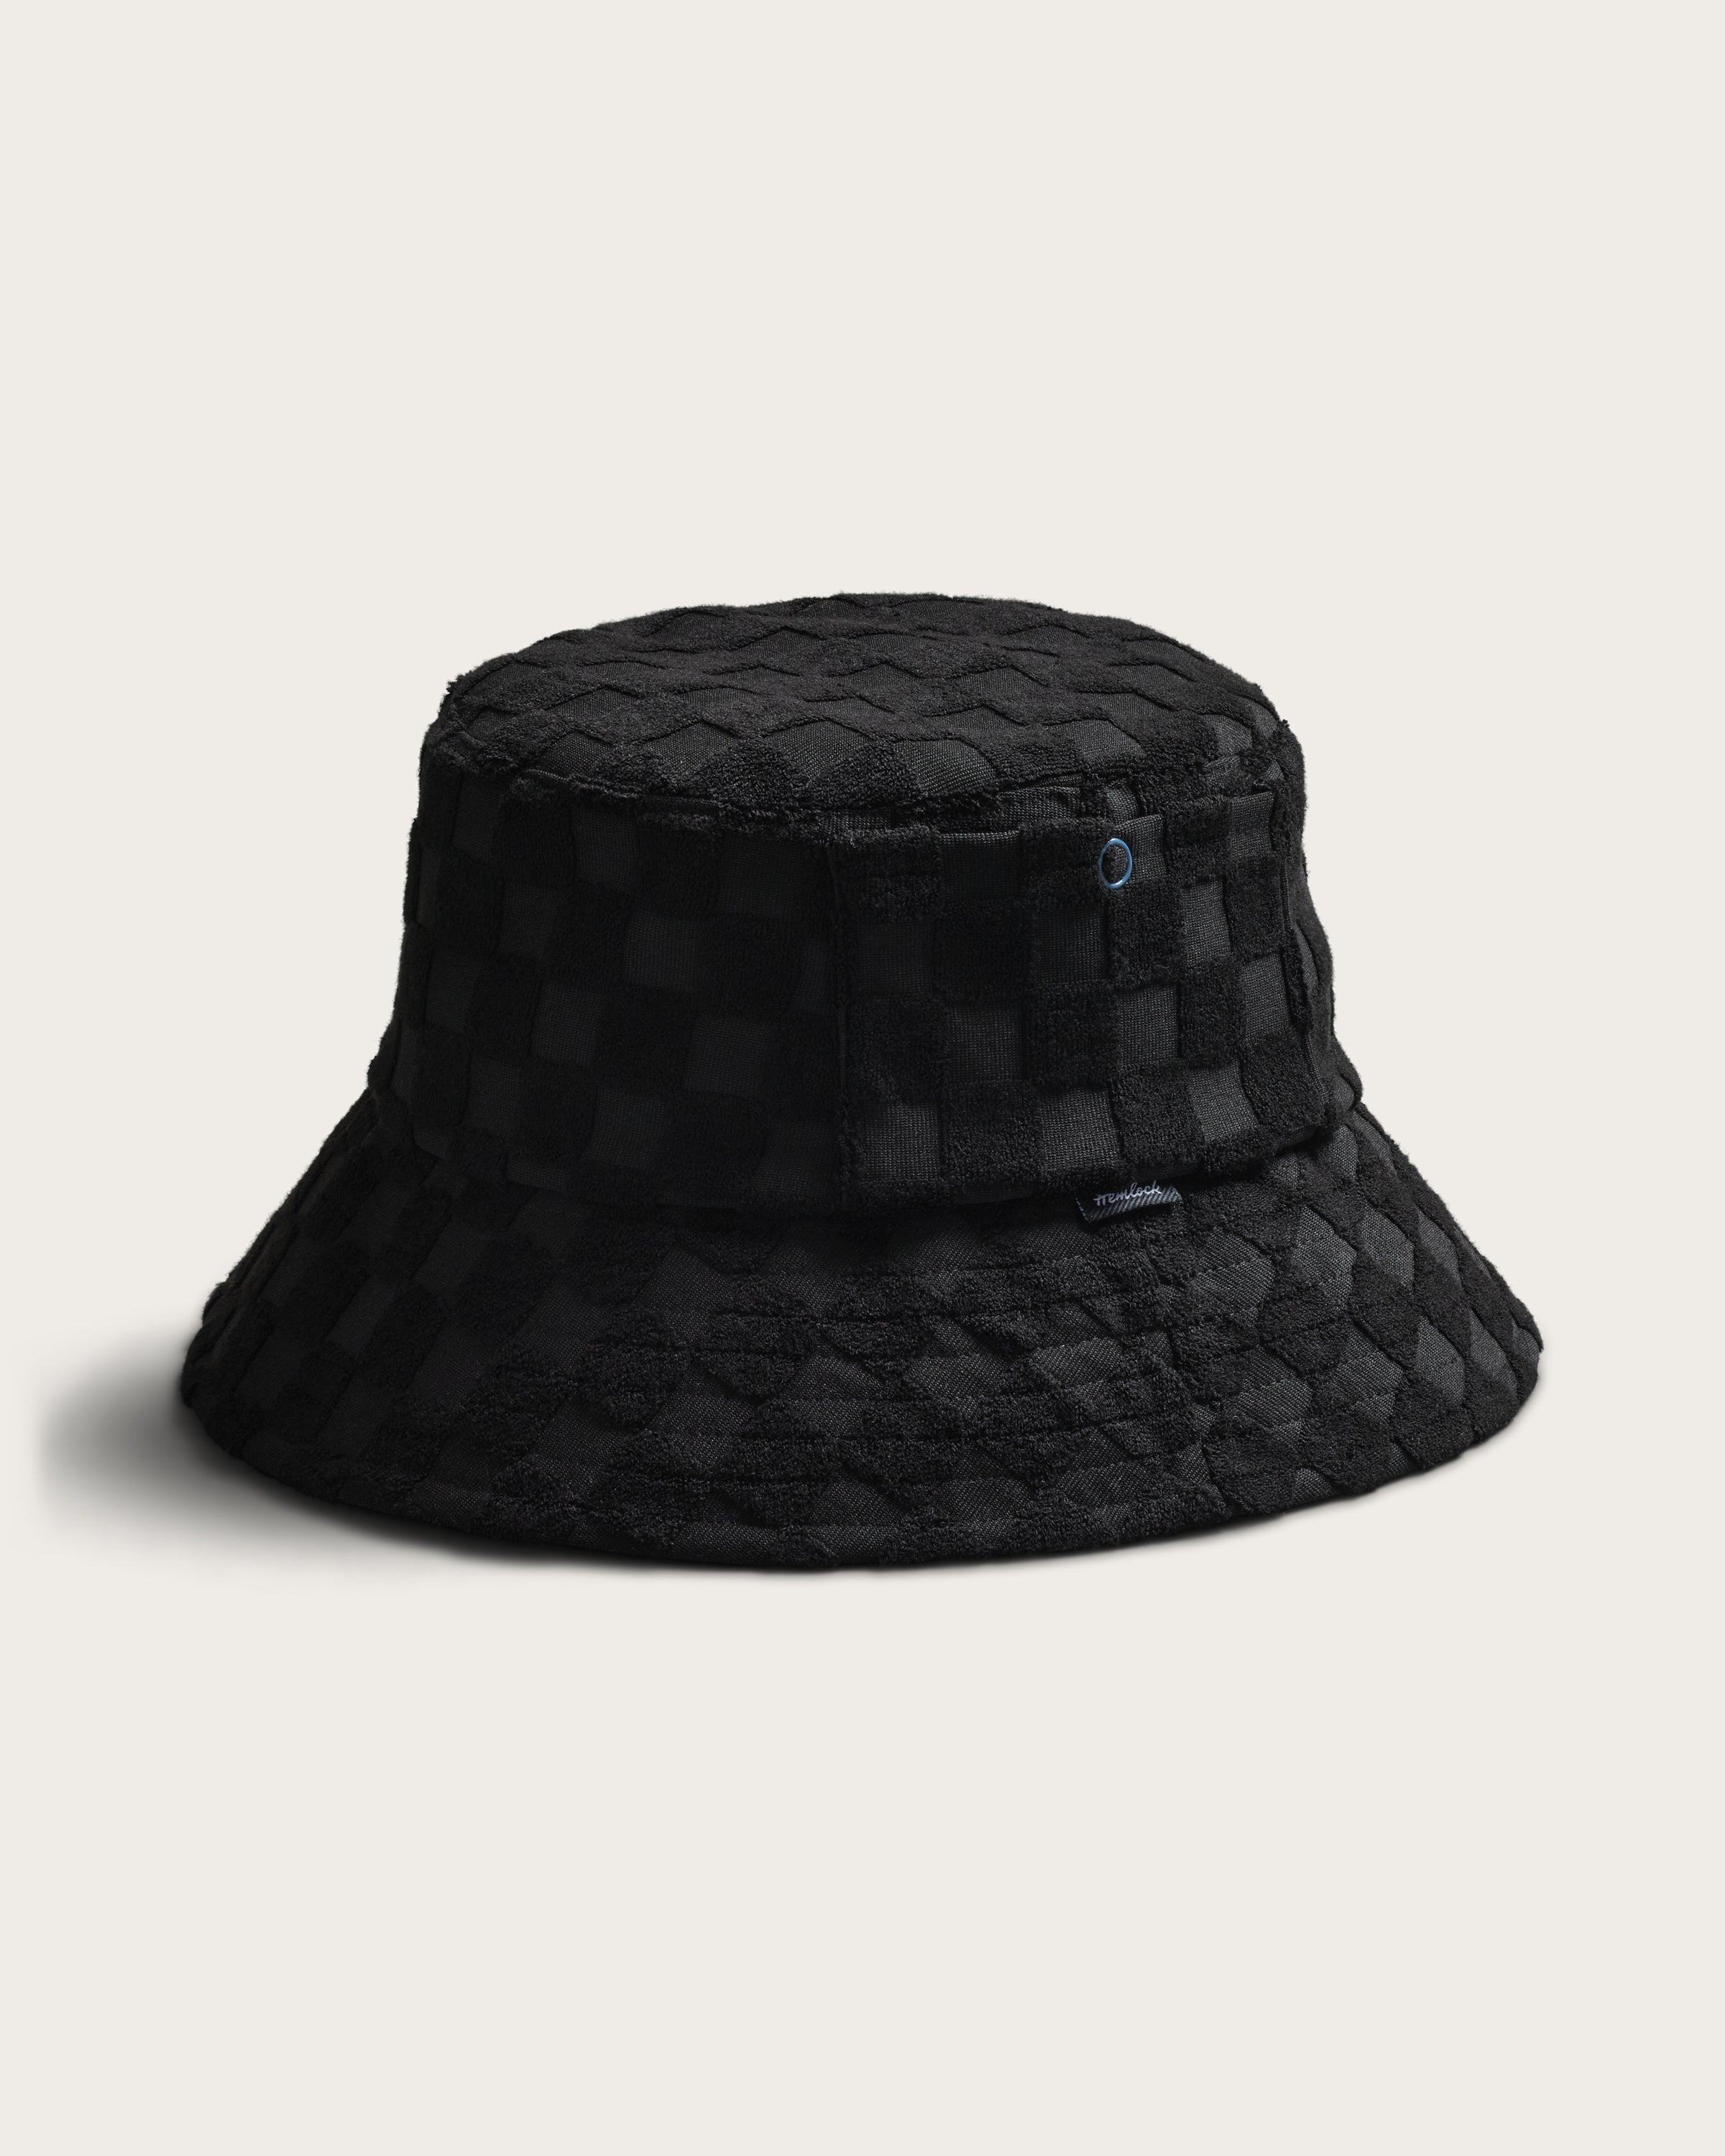 Hemlock Marina Terry Bucket Hat in Black Check detail